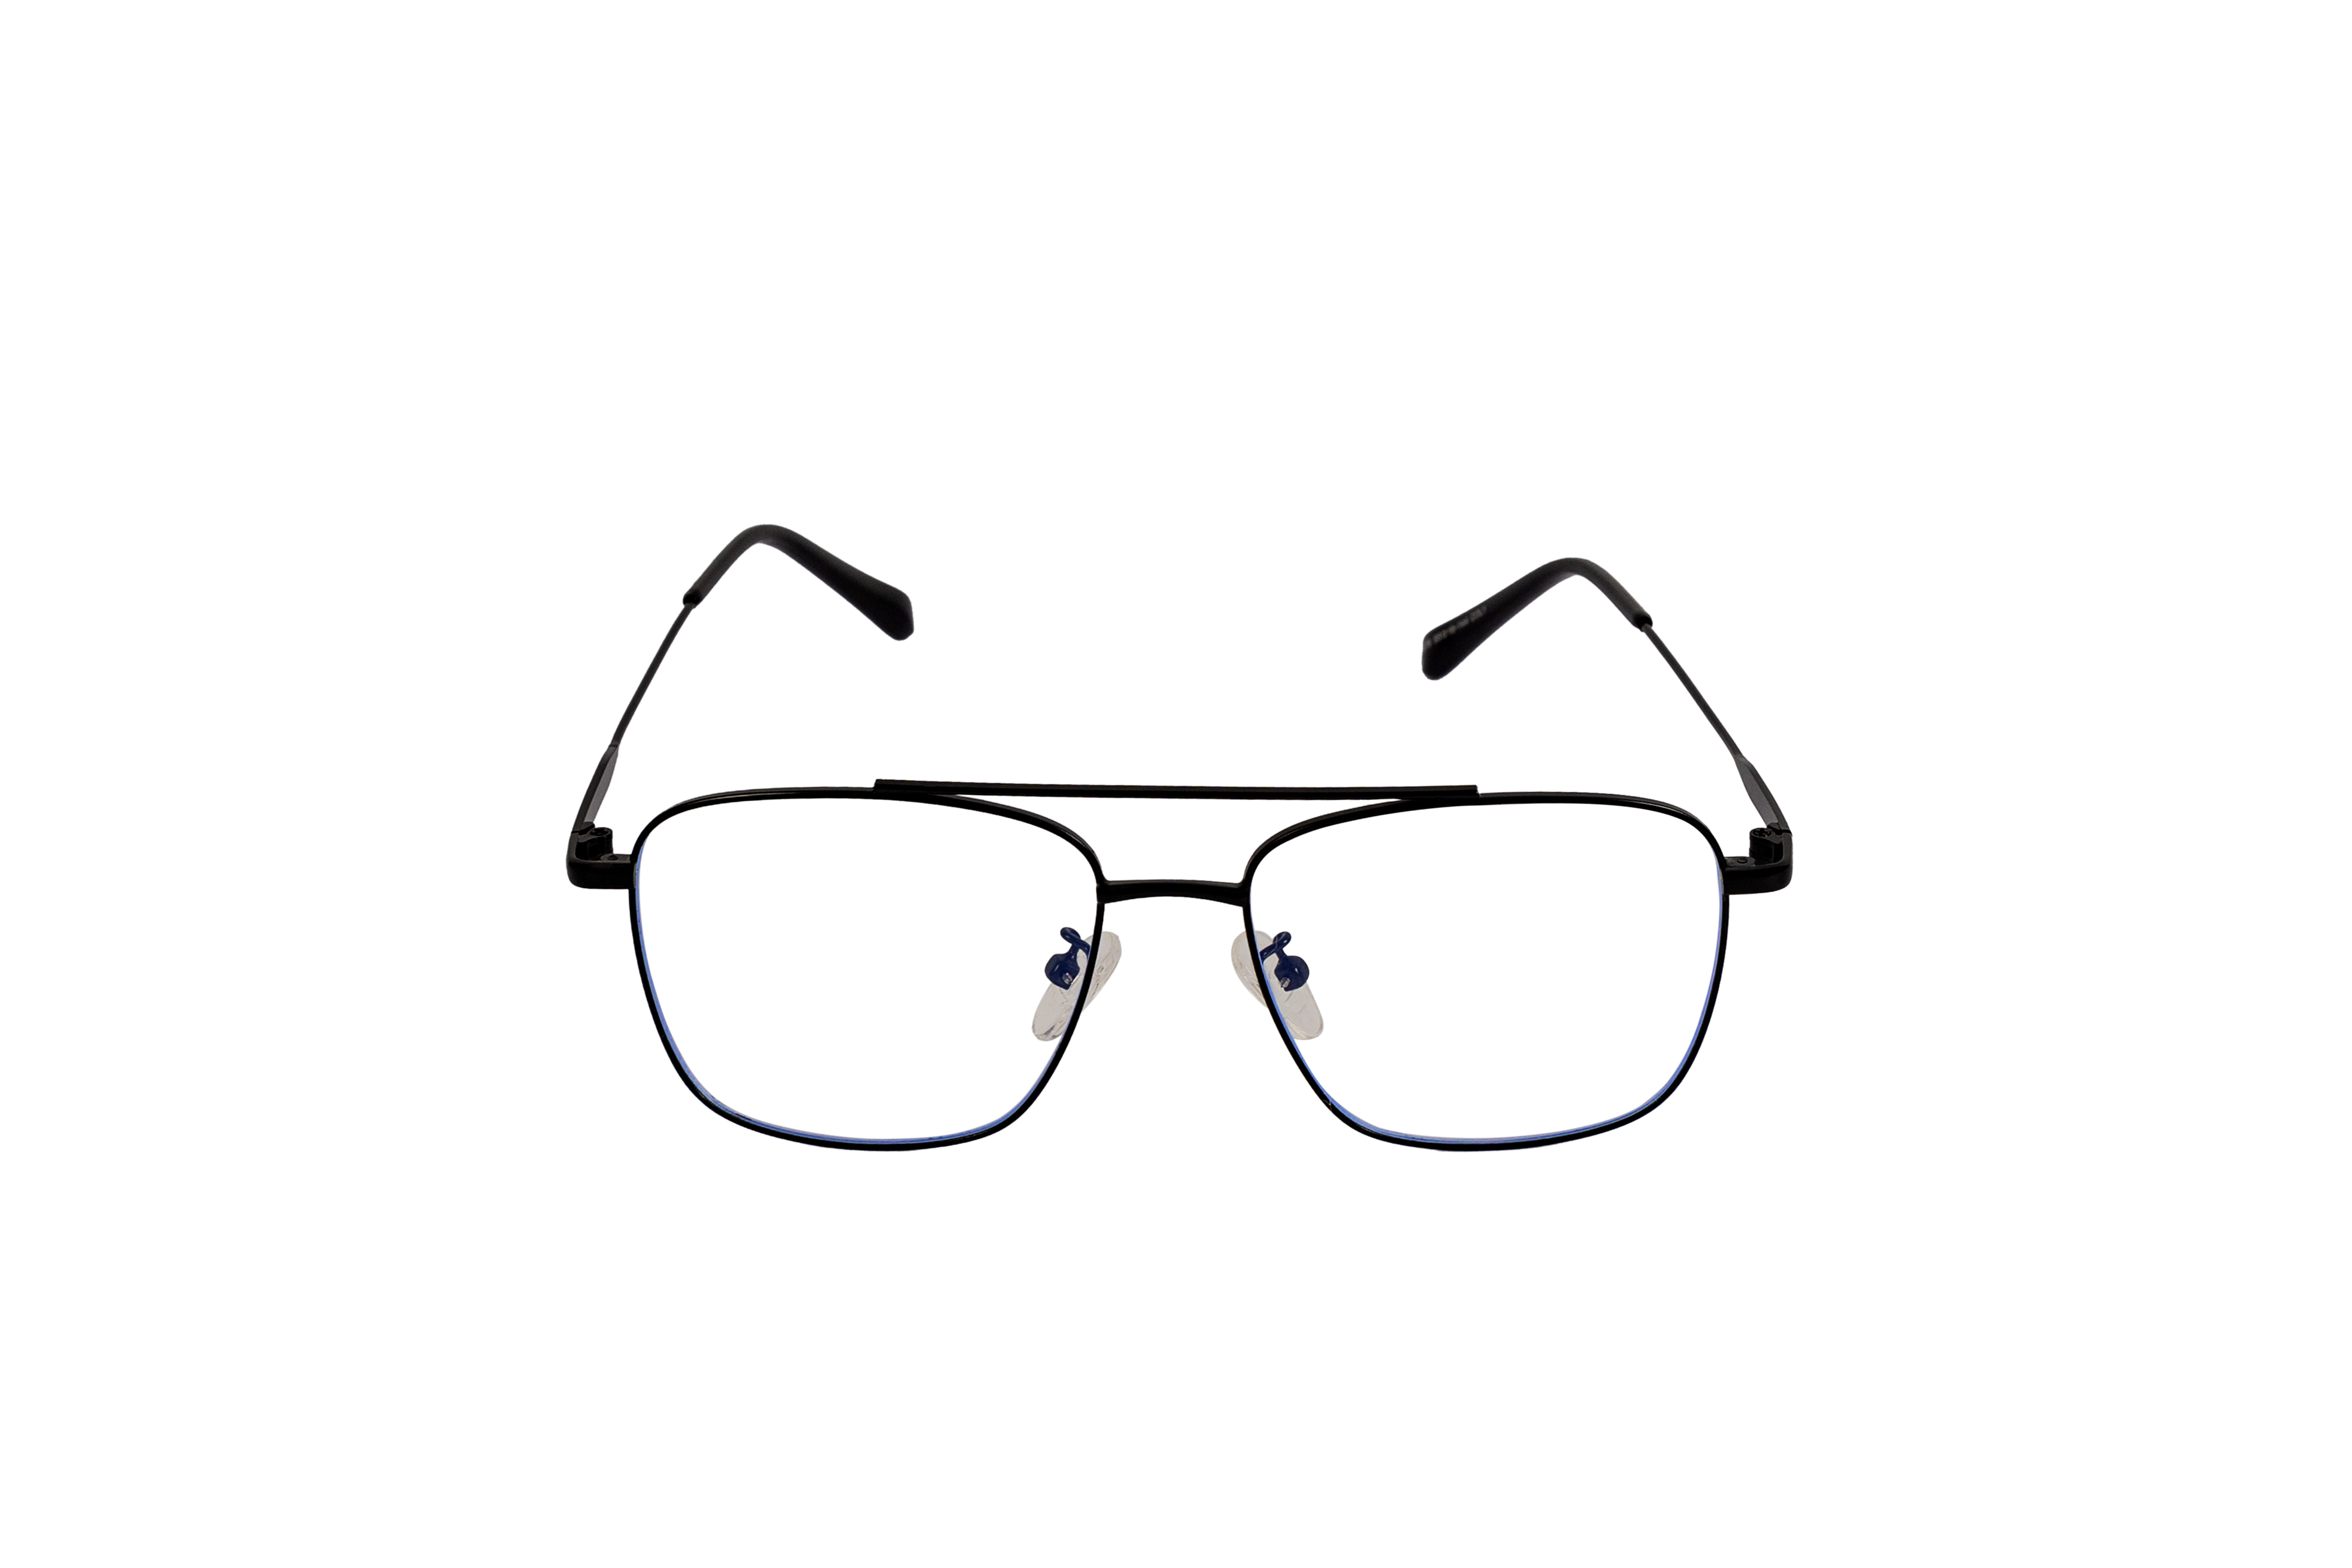     			SANEYEWEAR - Black Full Rim Square Computer Glasses ( Pack of 1 )